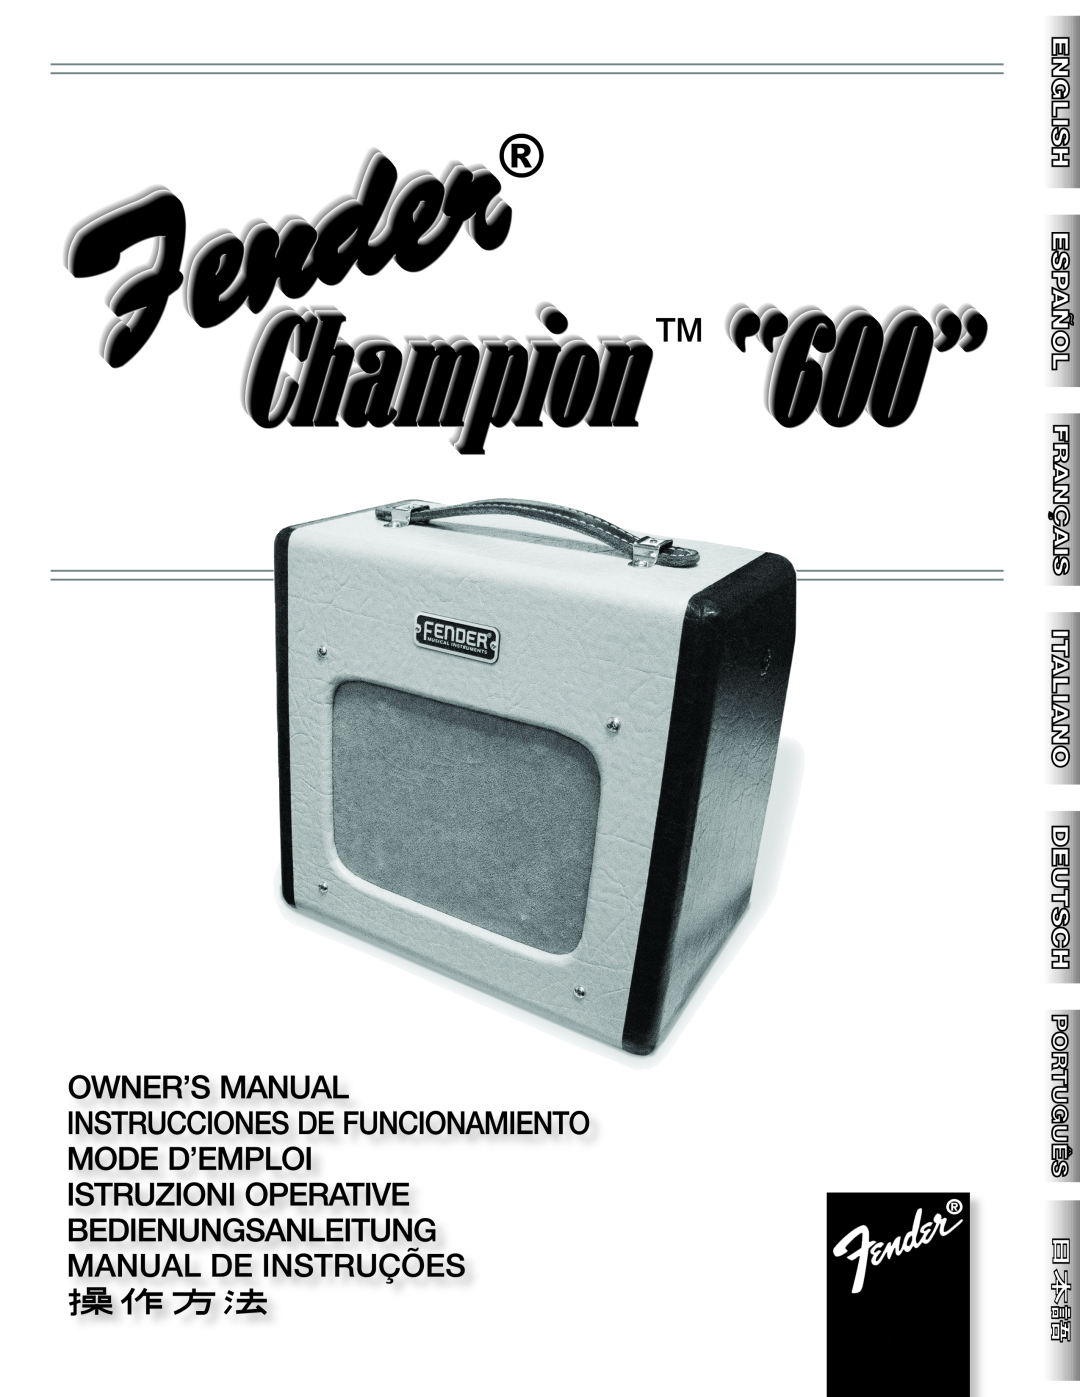 Fender 600 manual 